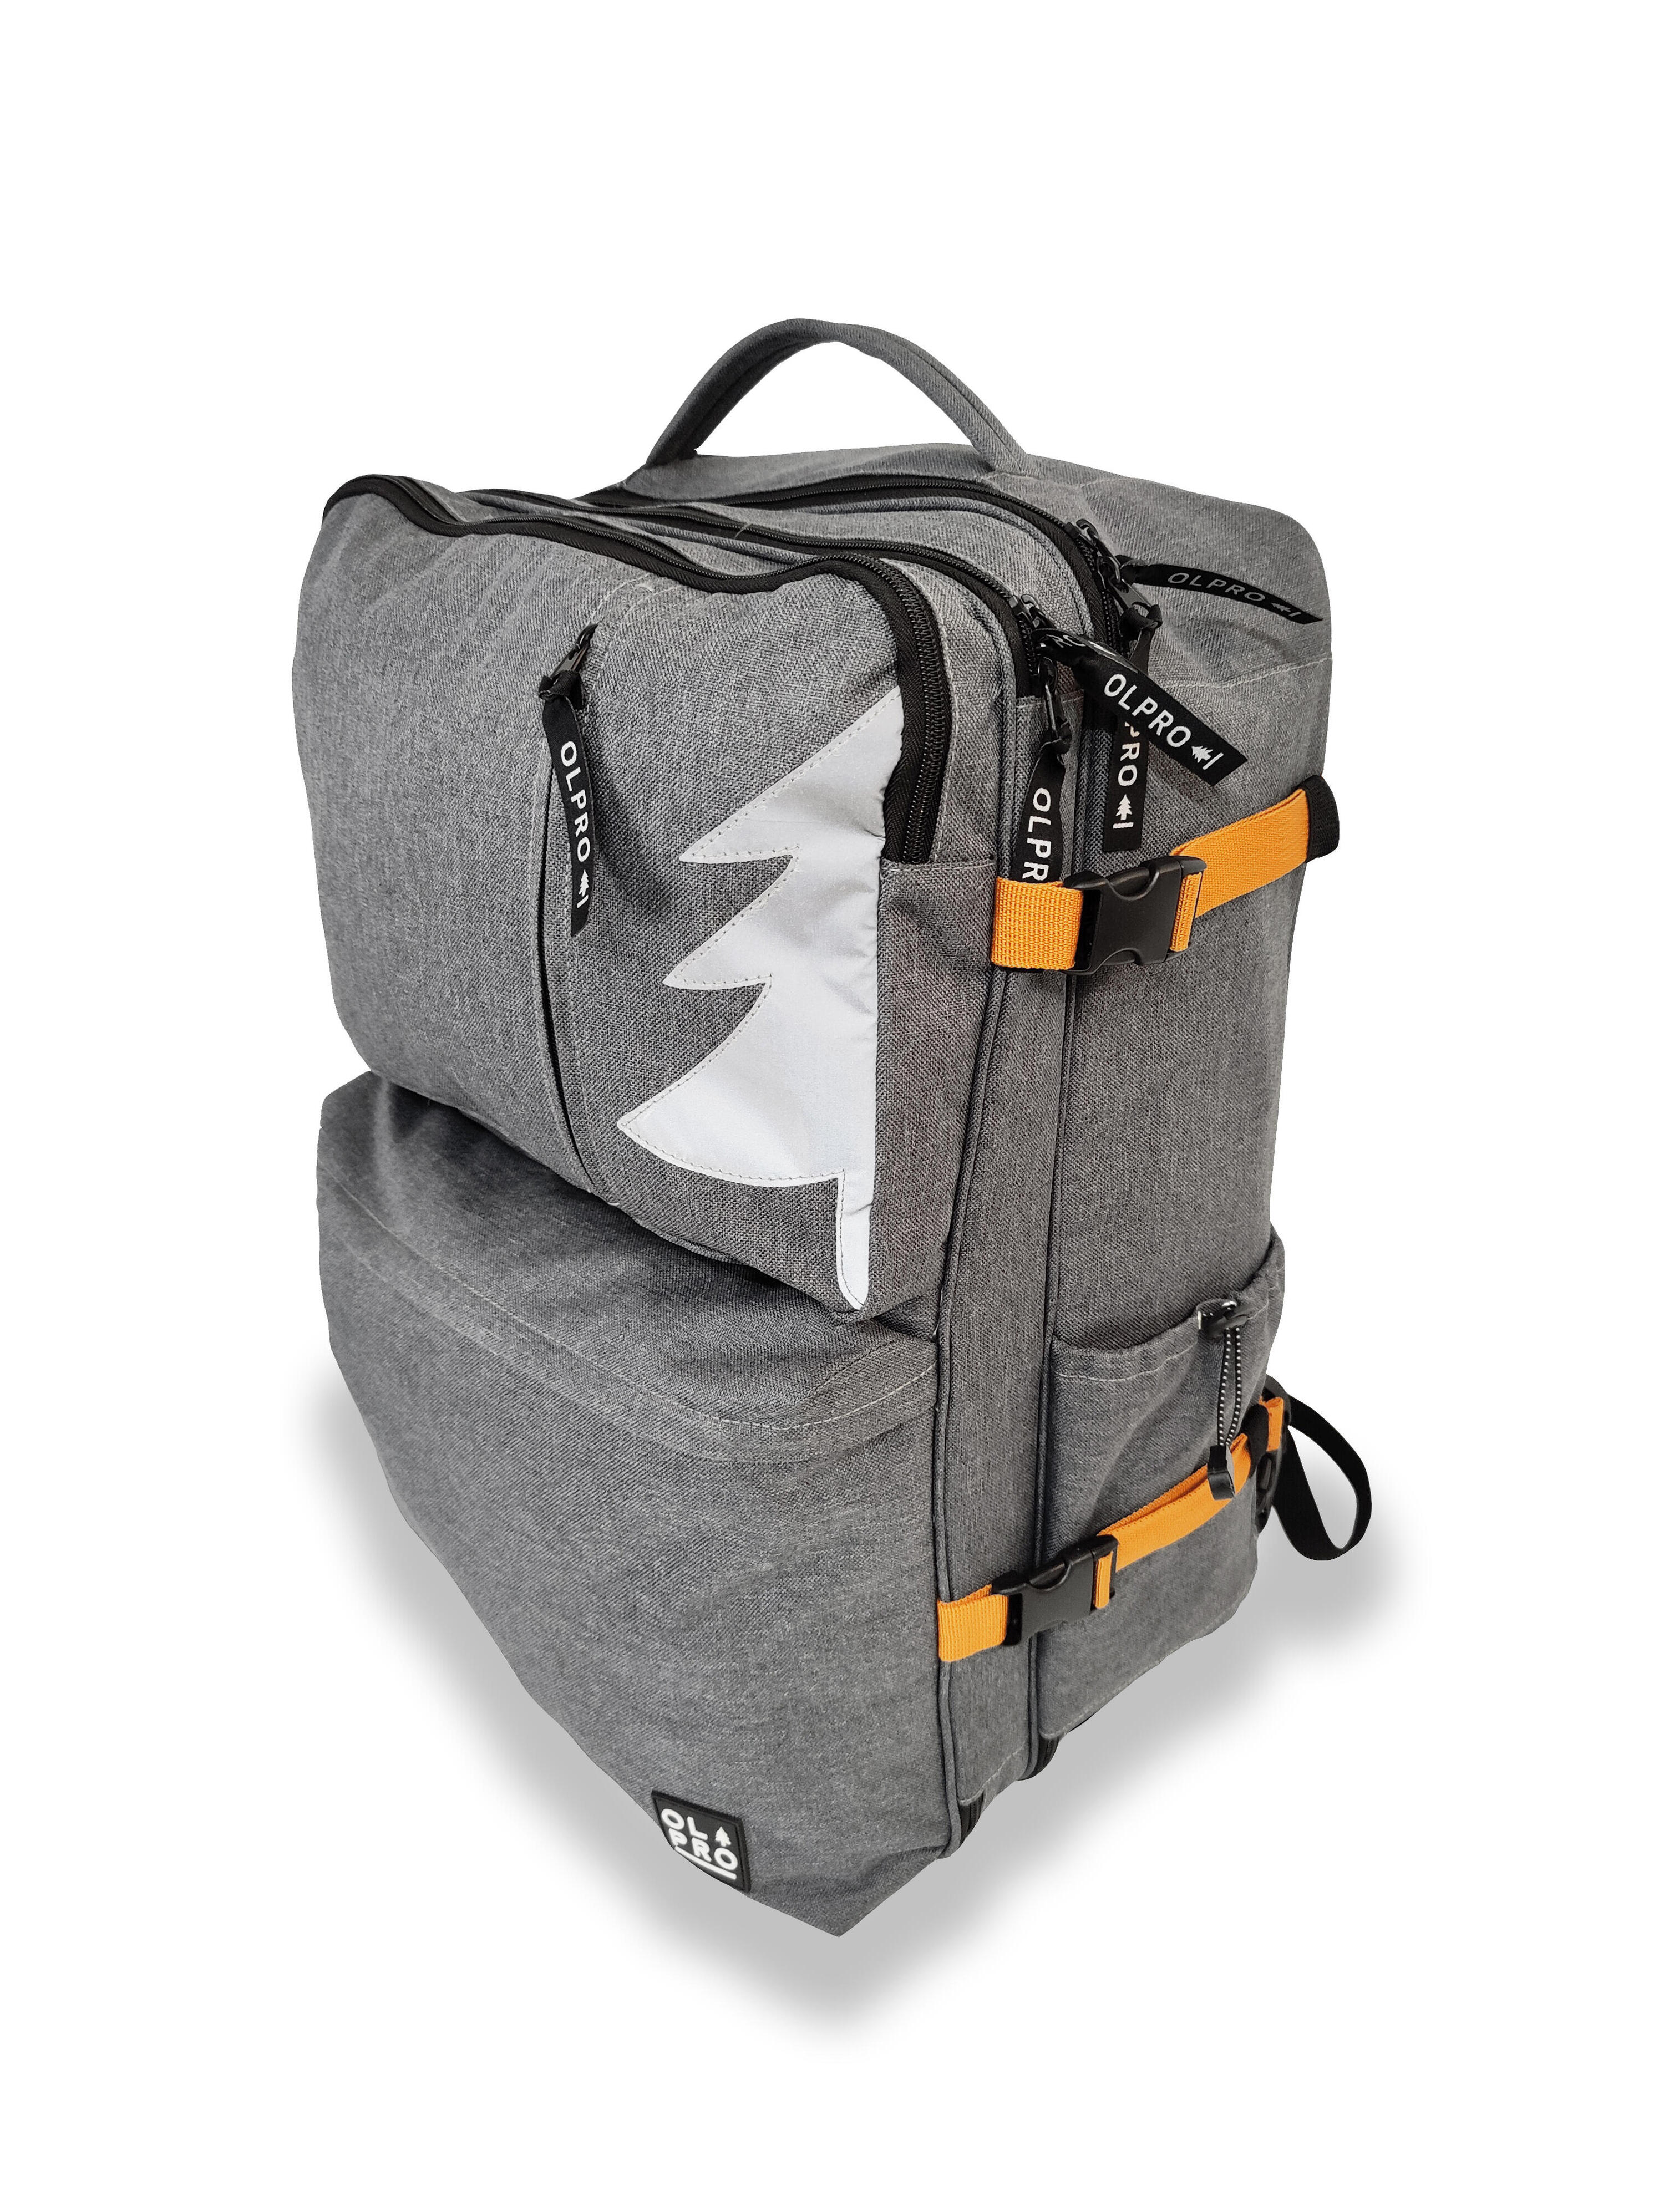 OLPRO 44L Travel/Cabin Backpack 4/7